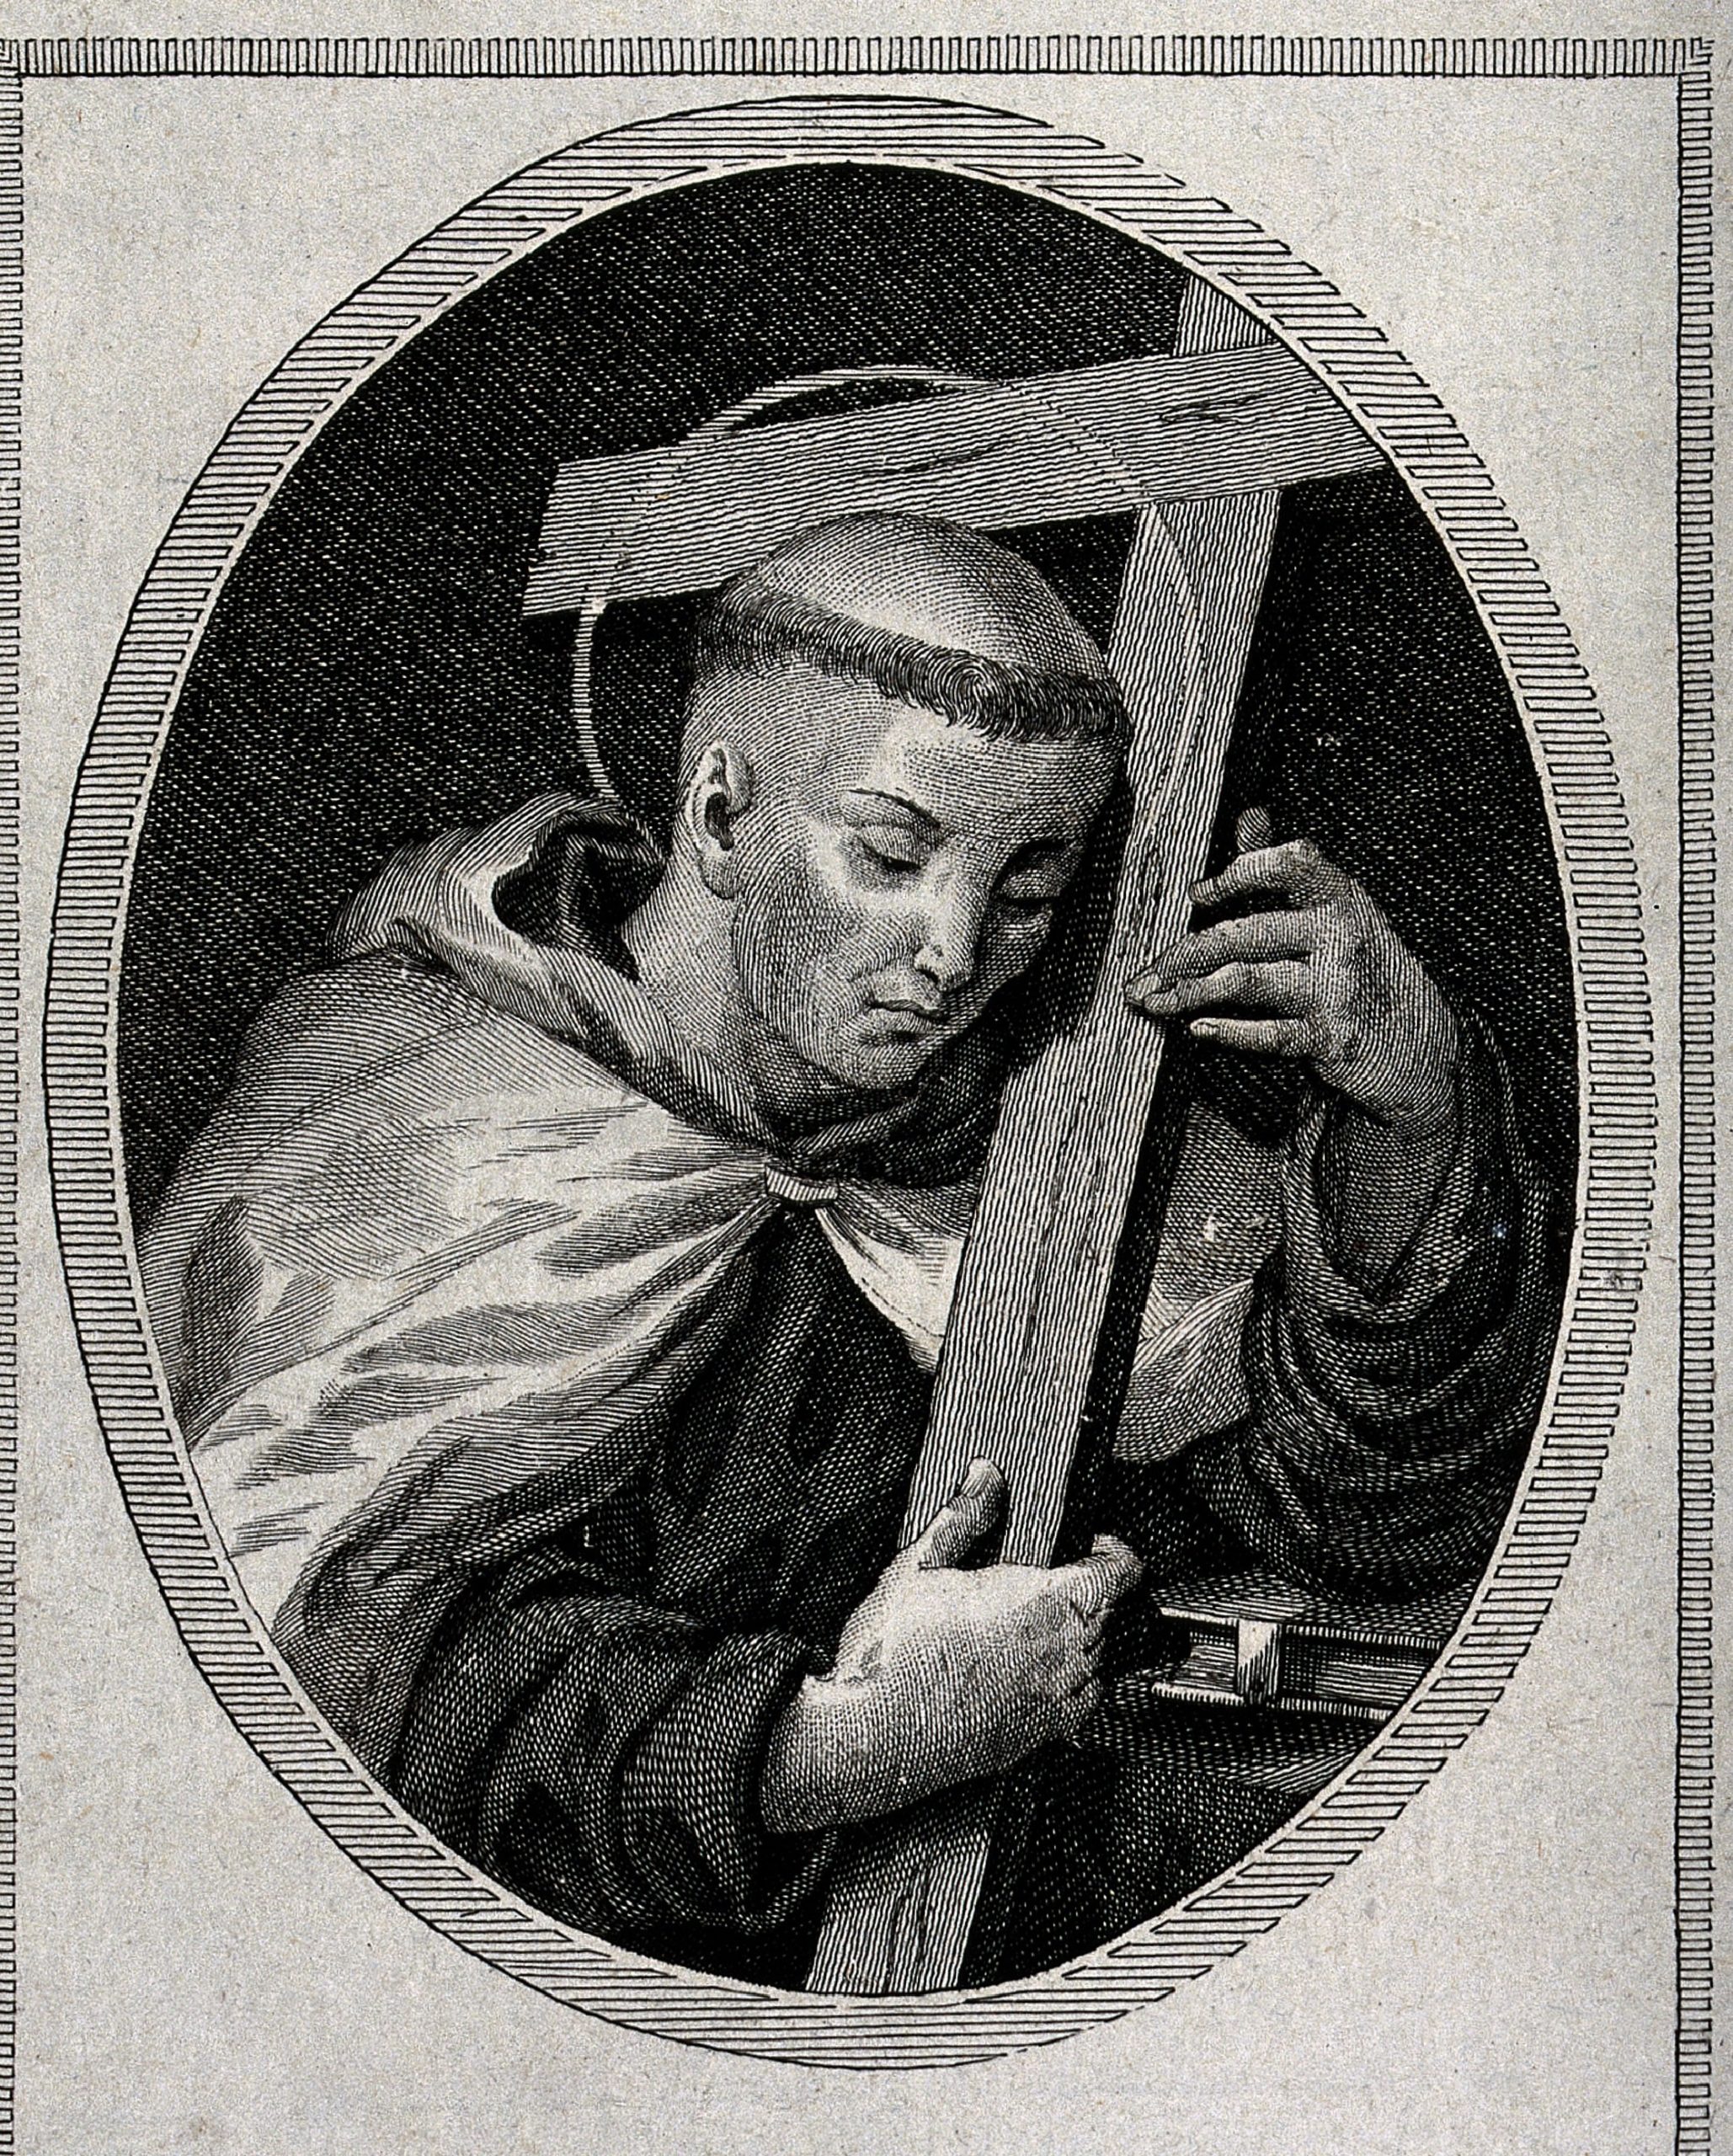 St. John Joseph of the Cross